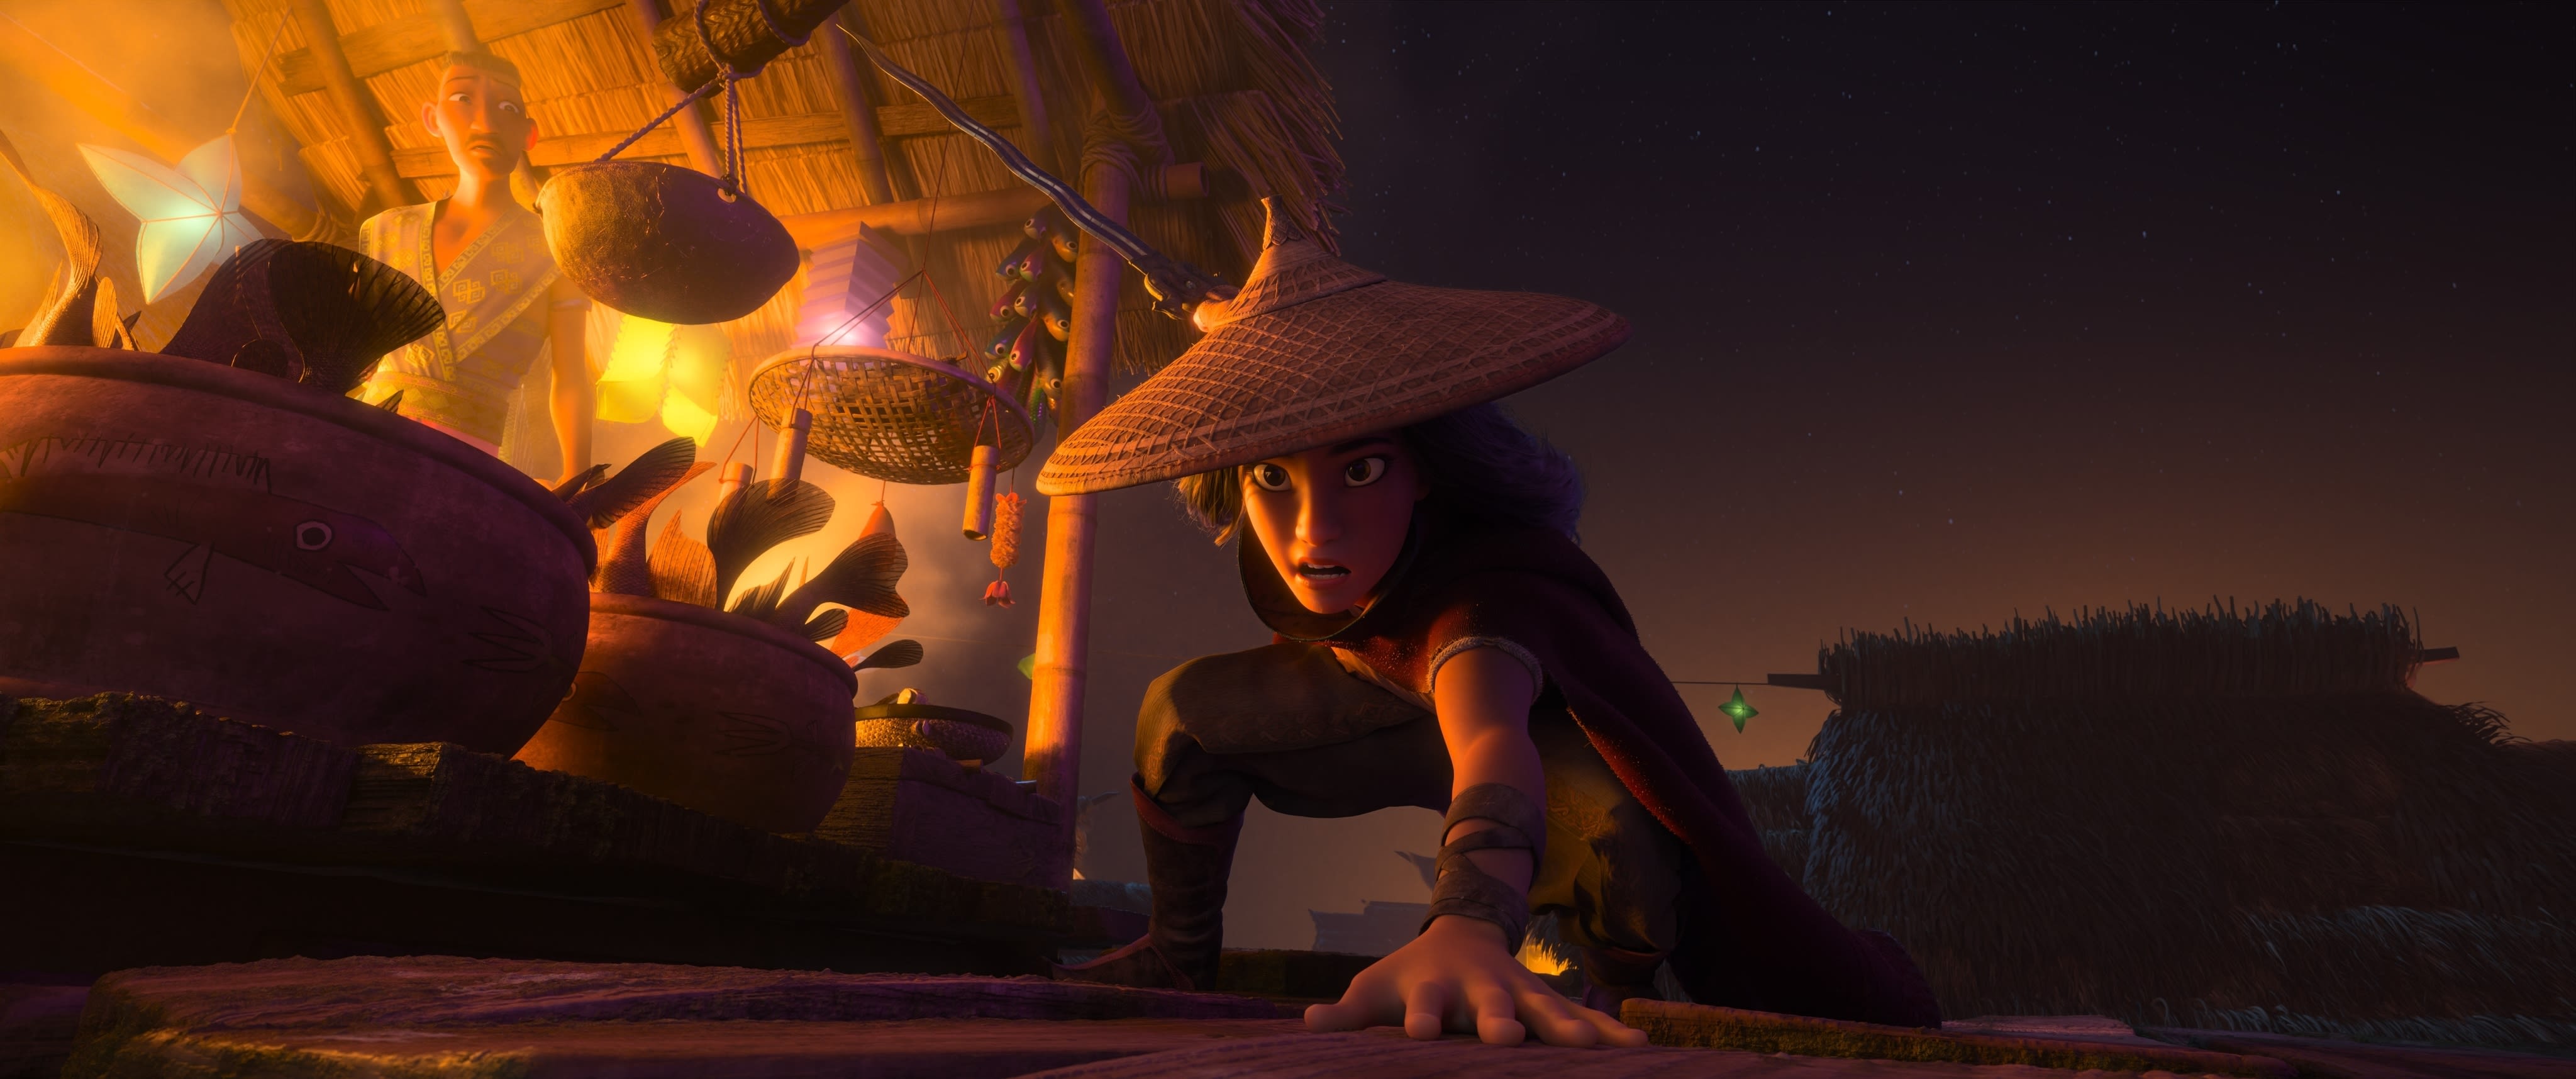 Disney Raya And The Last Dragon Kumandra Story Set : Target